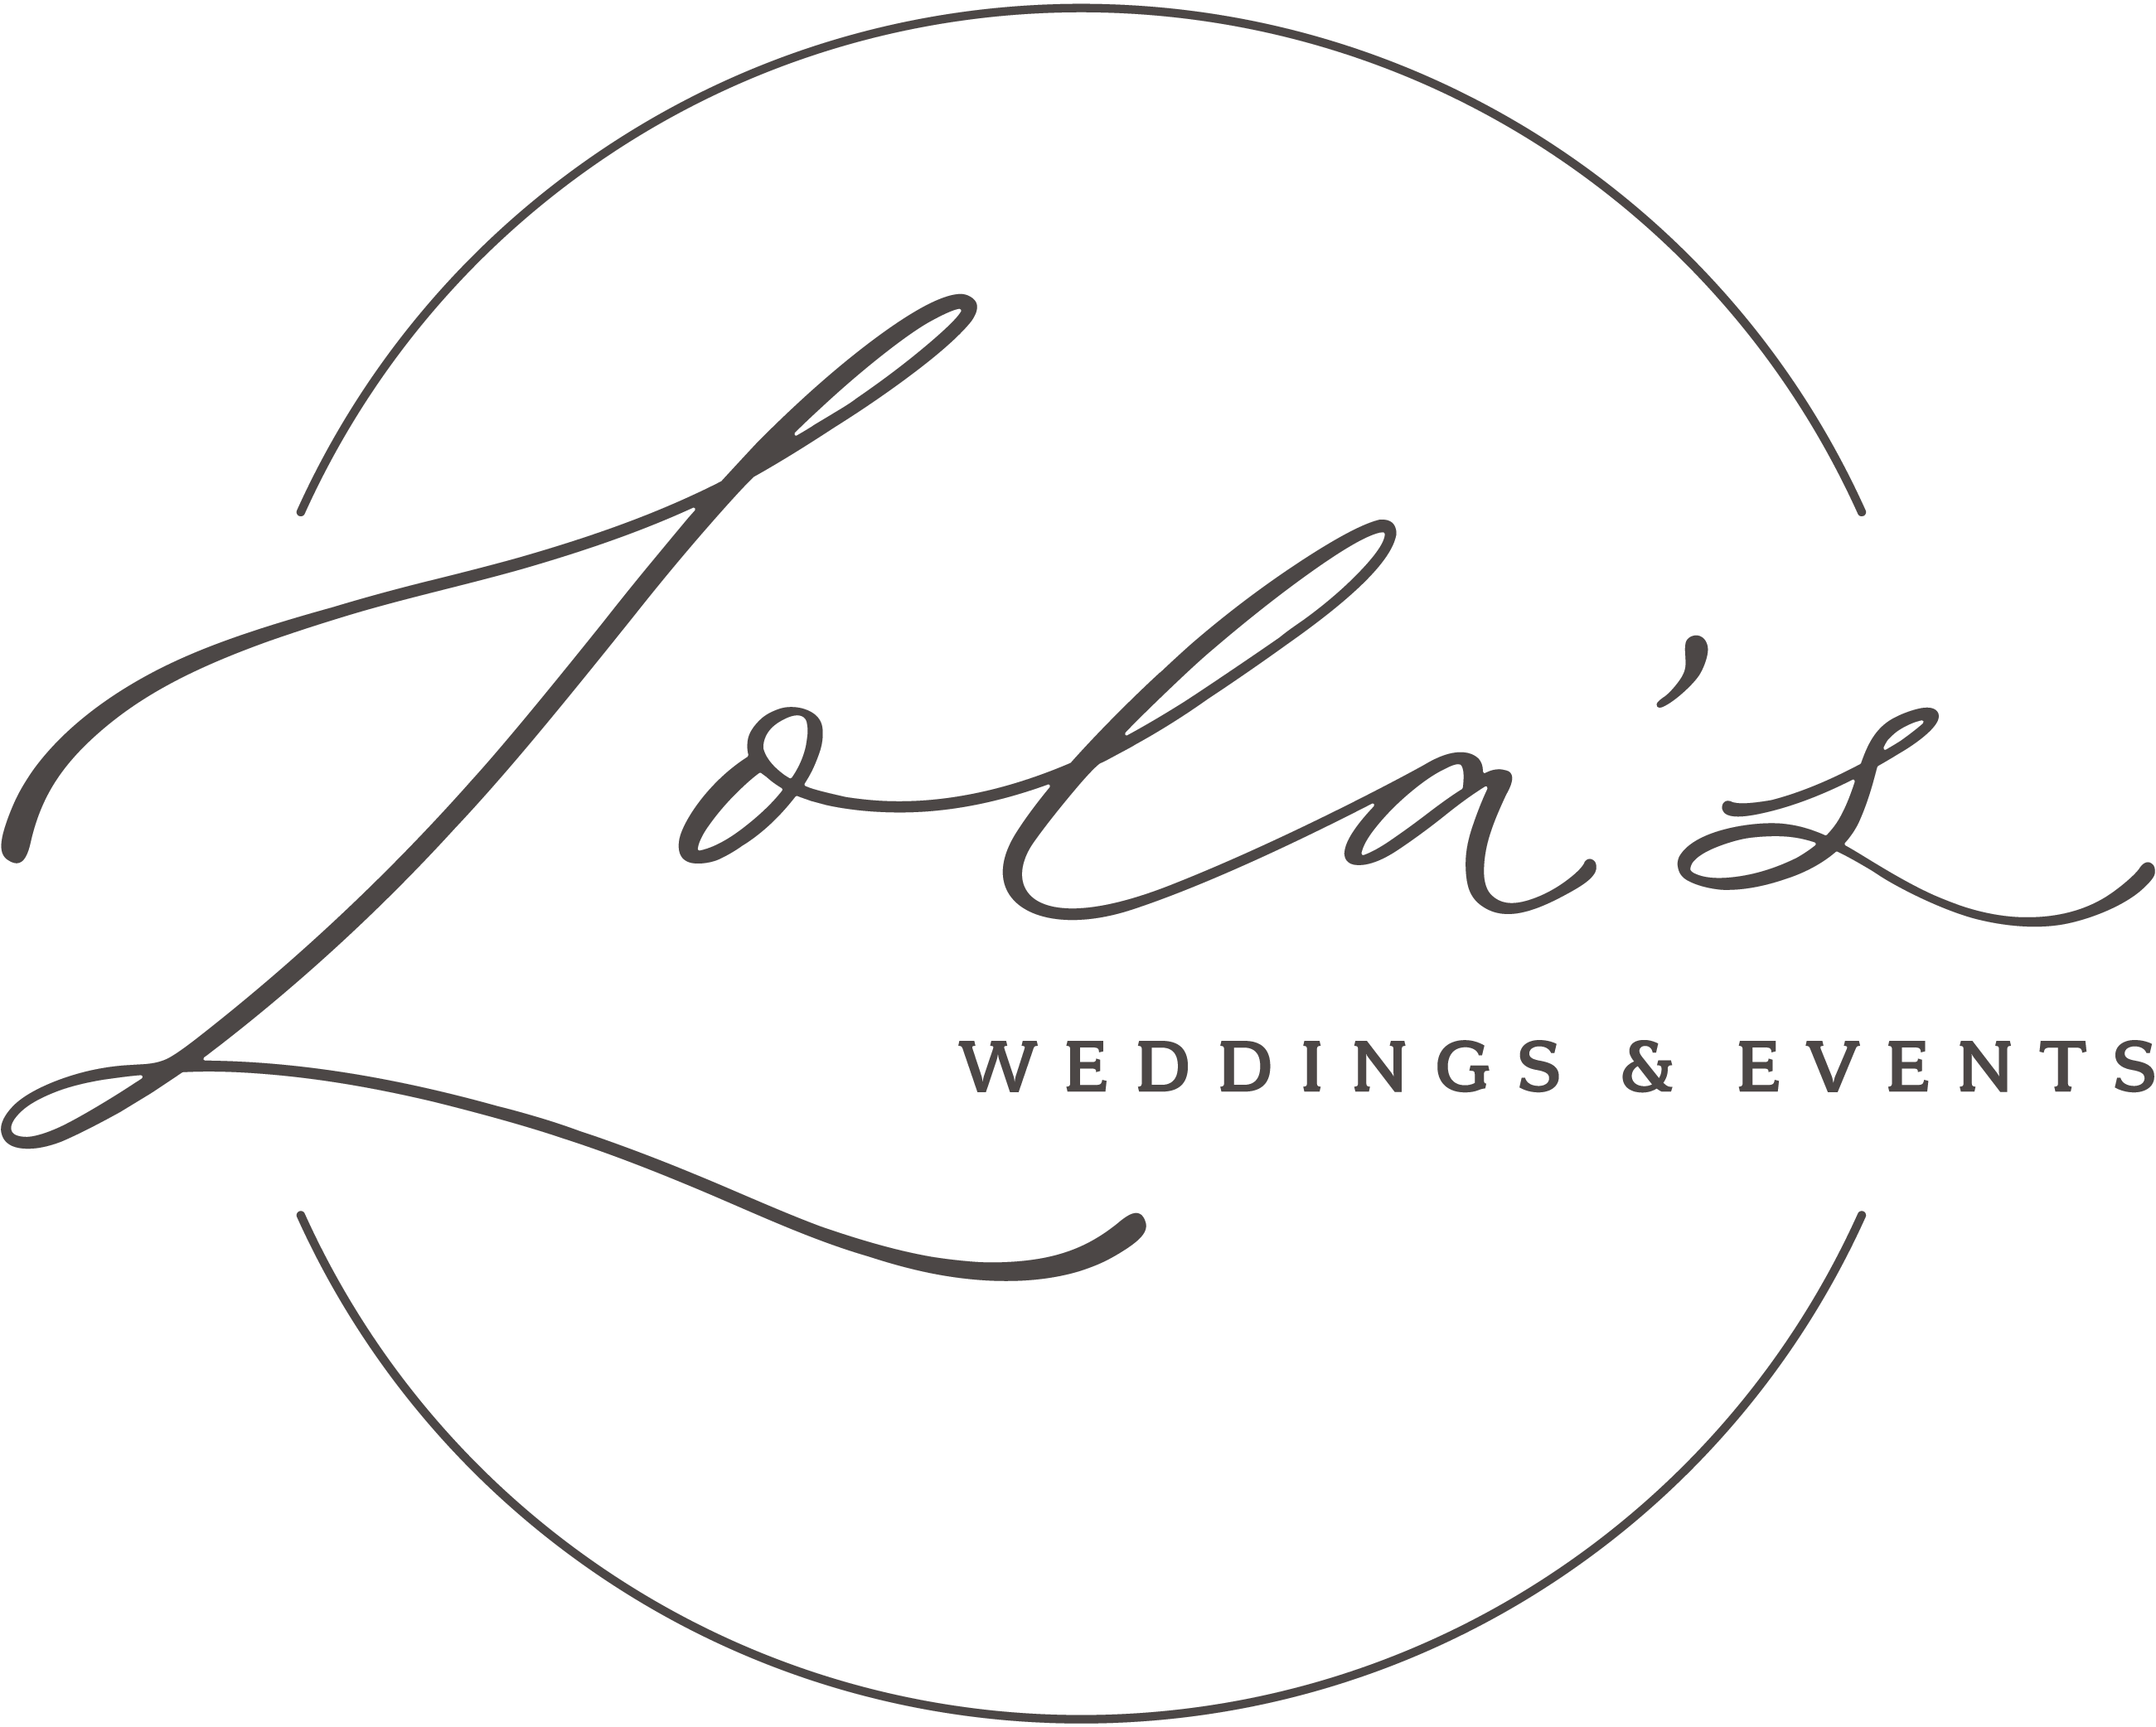 Lola’s Weddings & Events Home